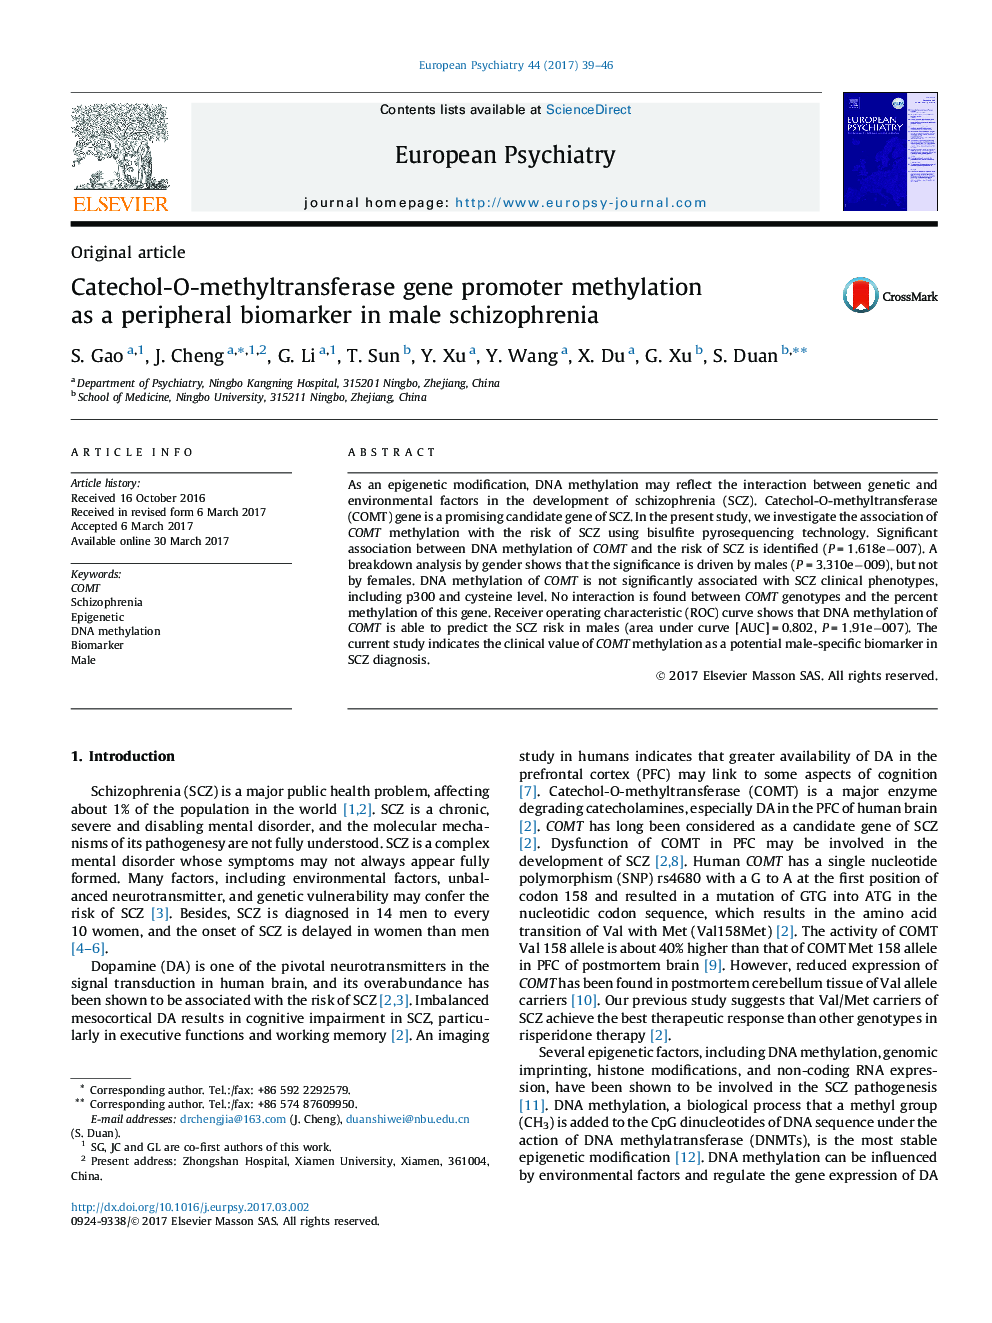 Original articleCatechol-O-methyltransferase gene promoter methylation as a peripheral biomarker in male schizophrenia